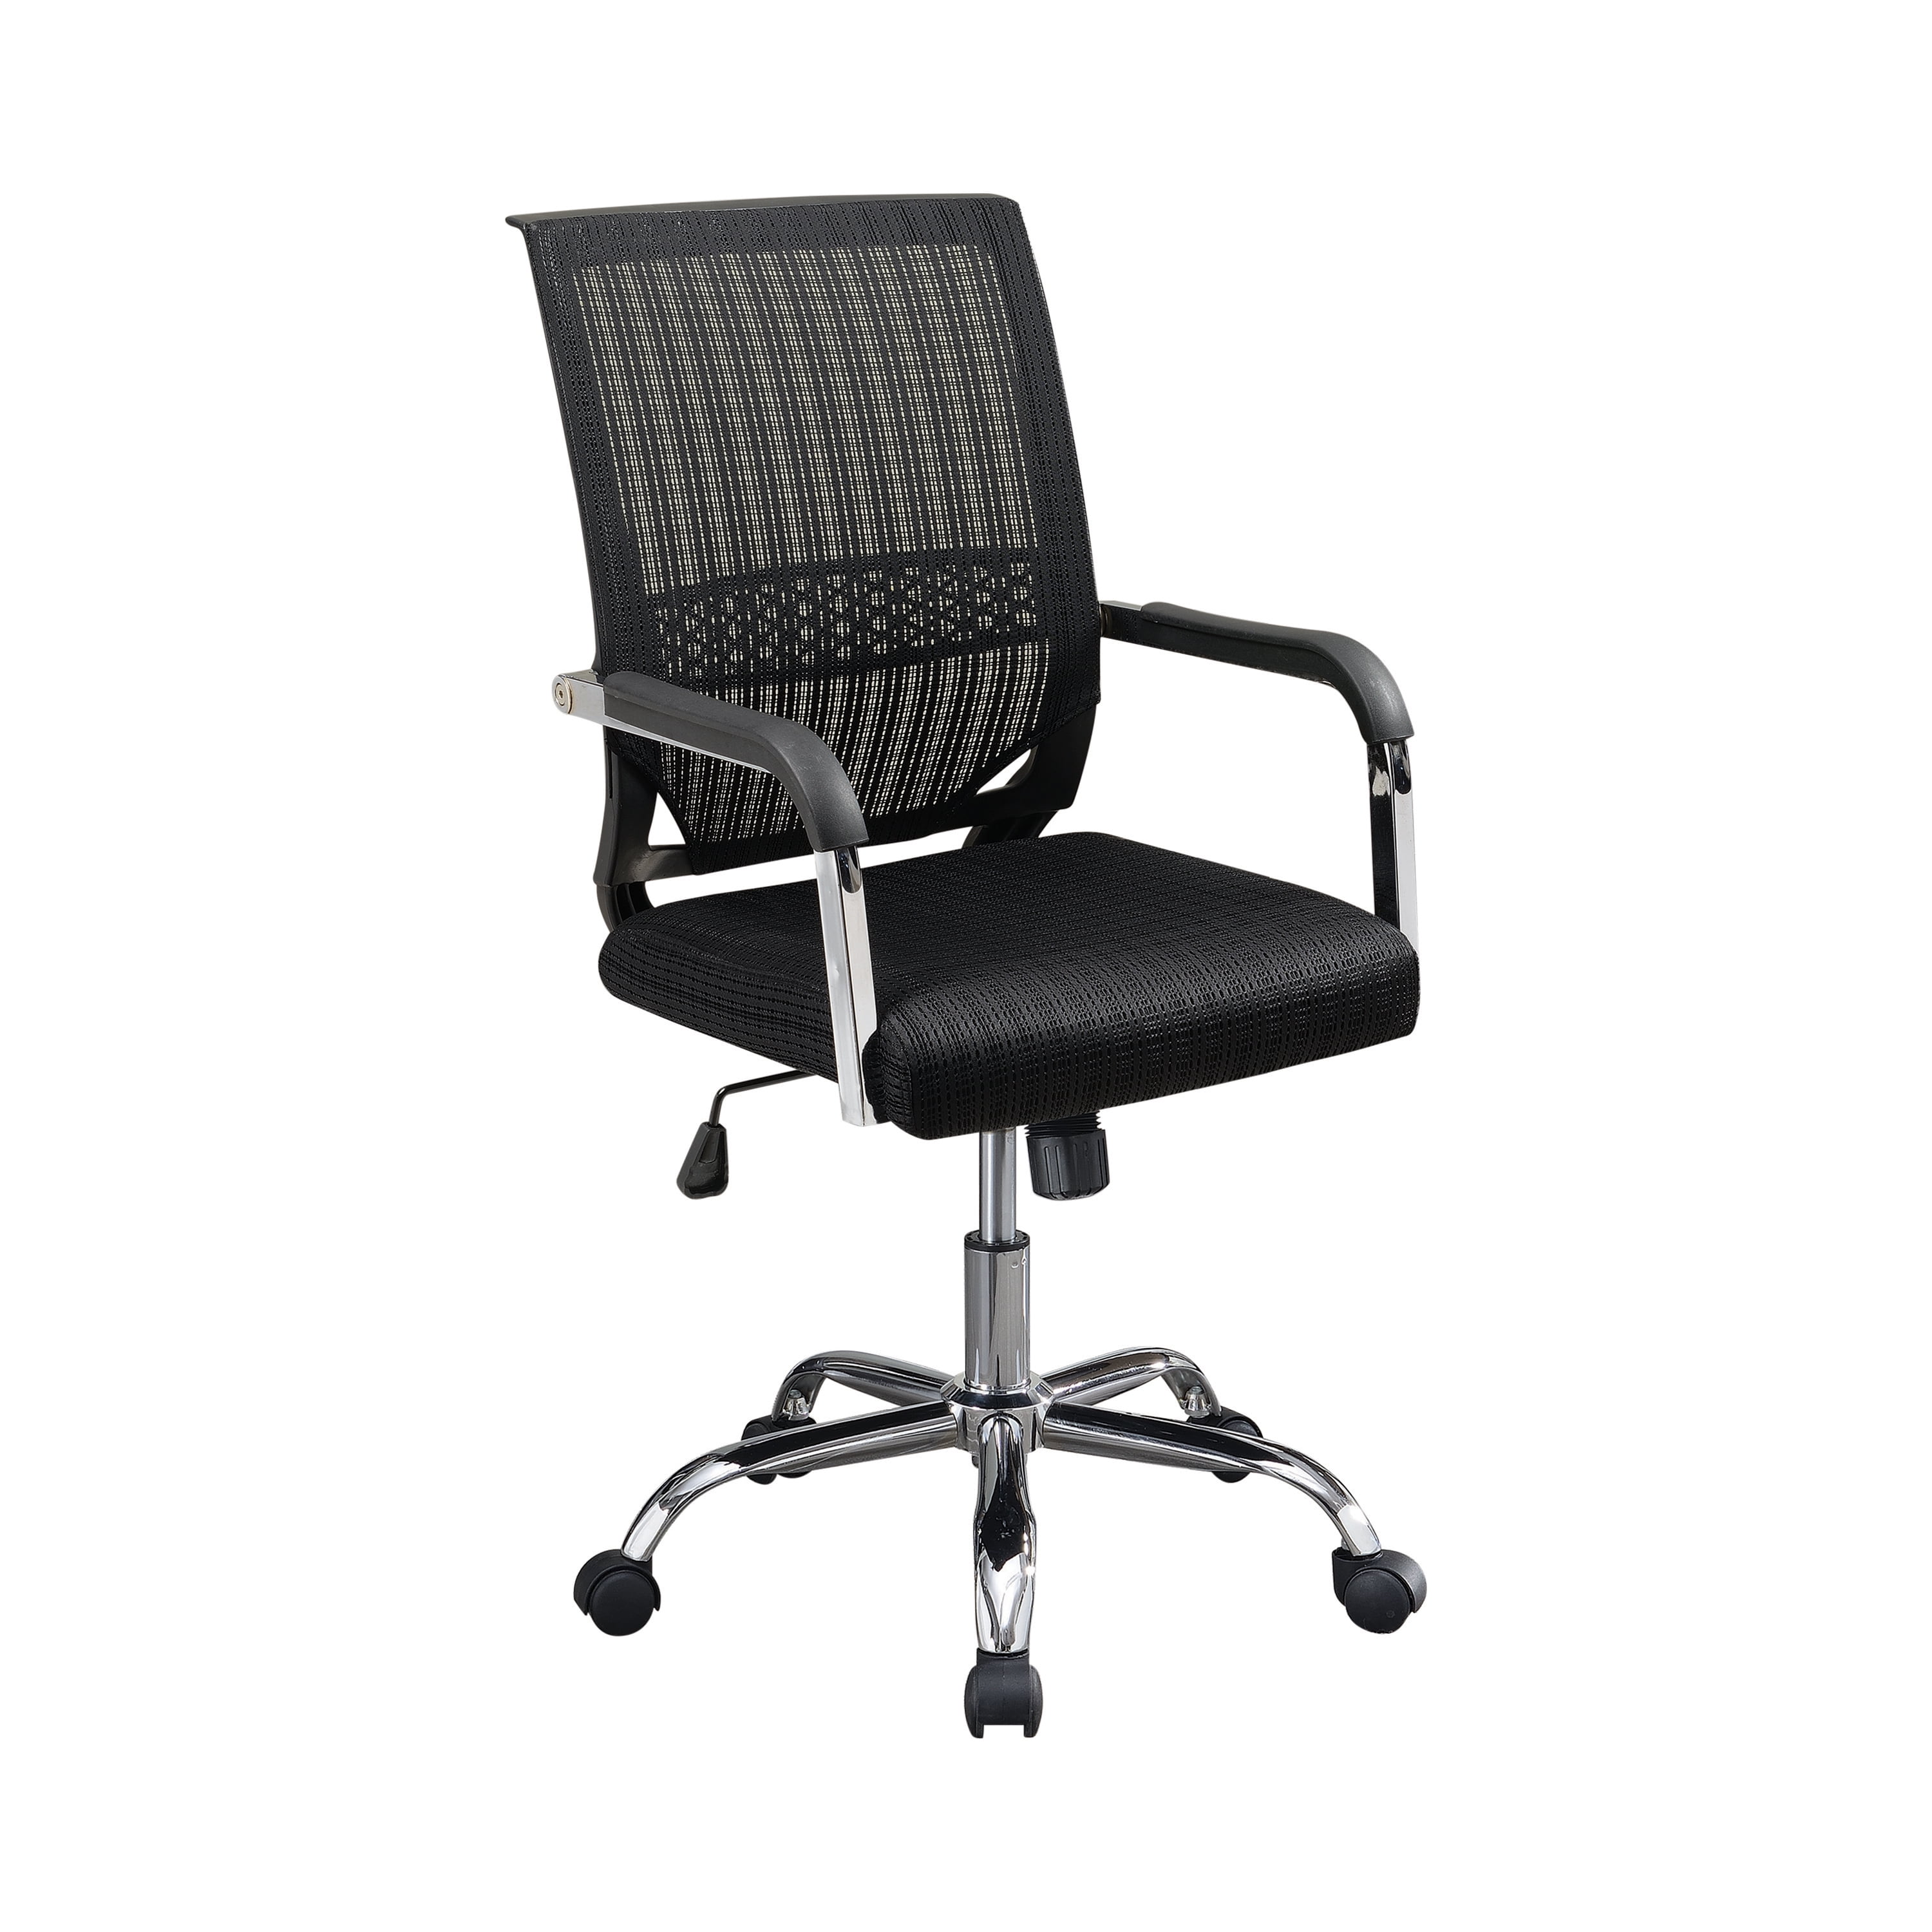 Adjustable Height Office Chair Black and Chrome - Walmart.com - Walmart.com